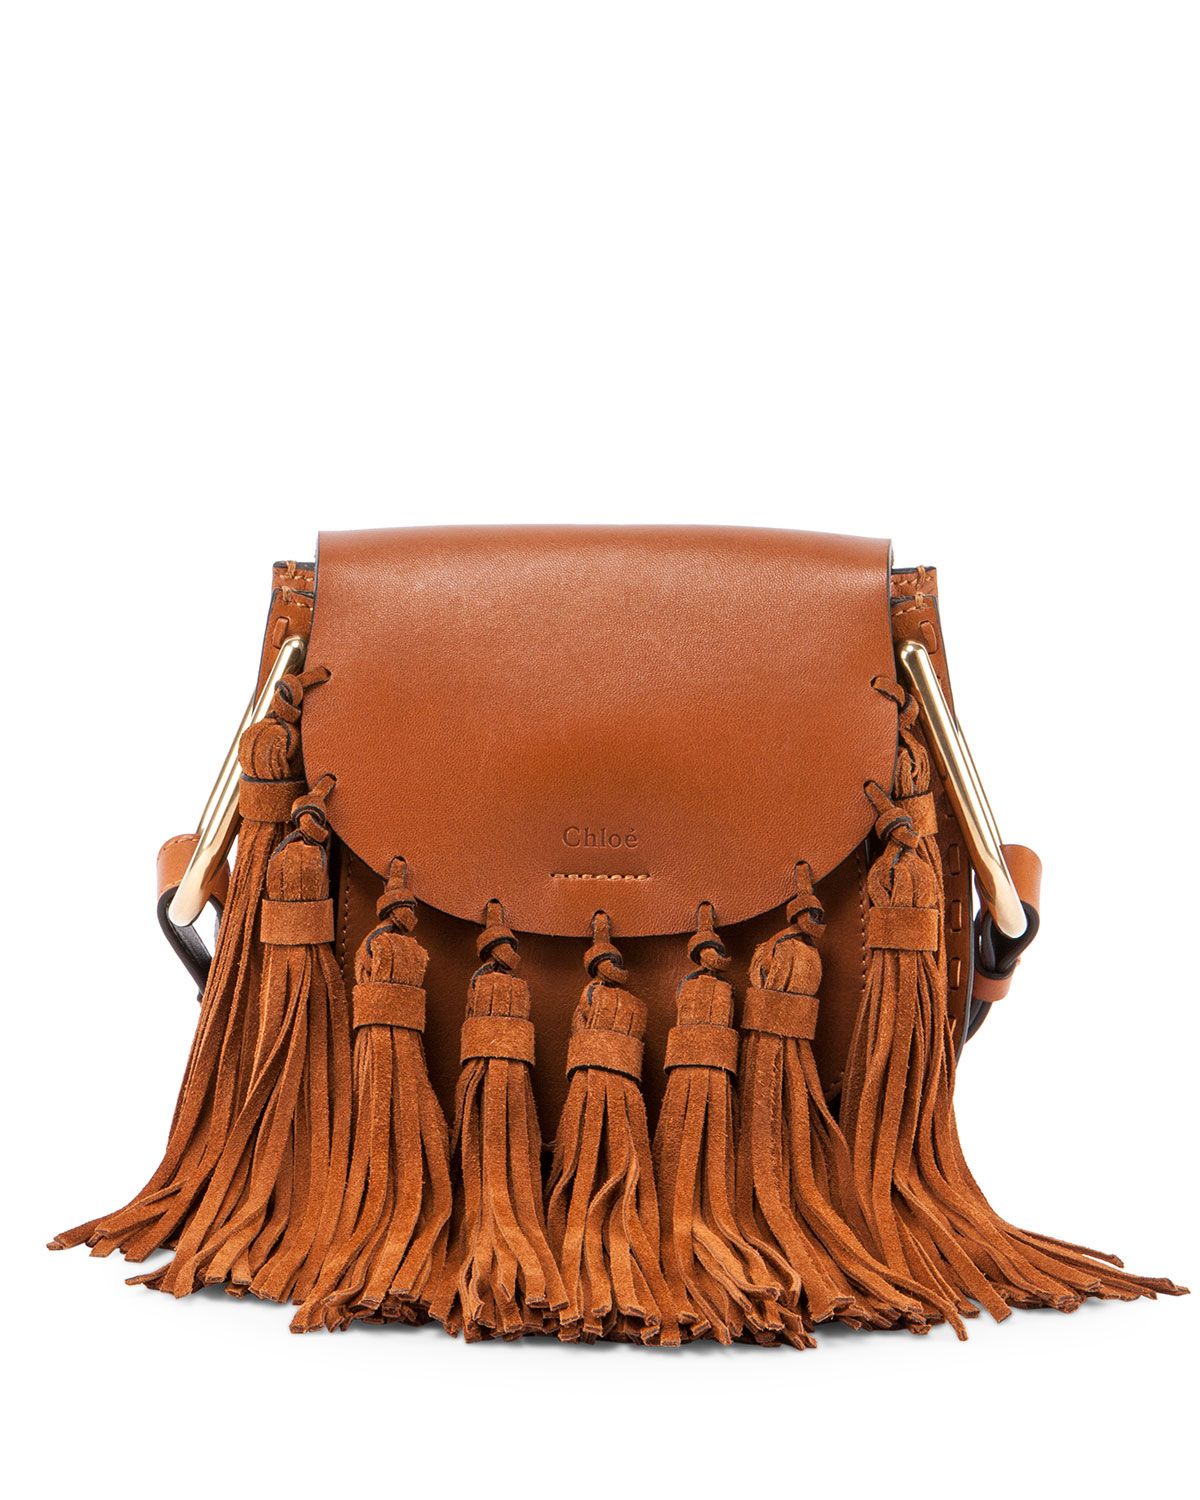 Hudson Mini Fringe Shoulder Bag, Caramel - Chloe | Neiman Marcus